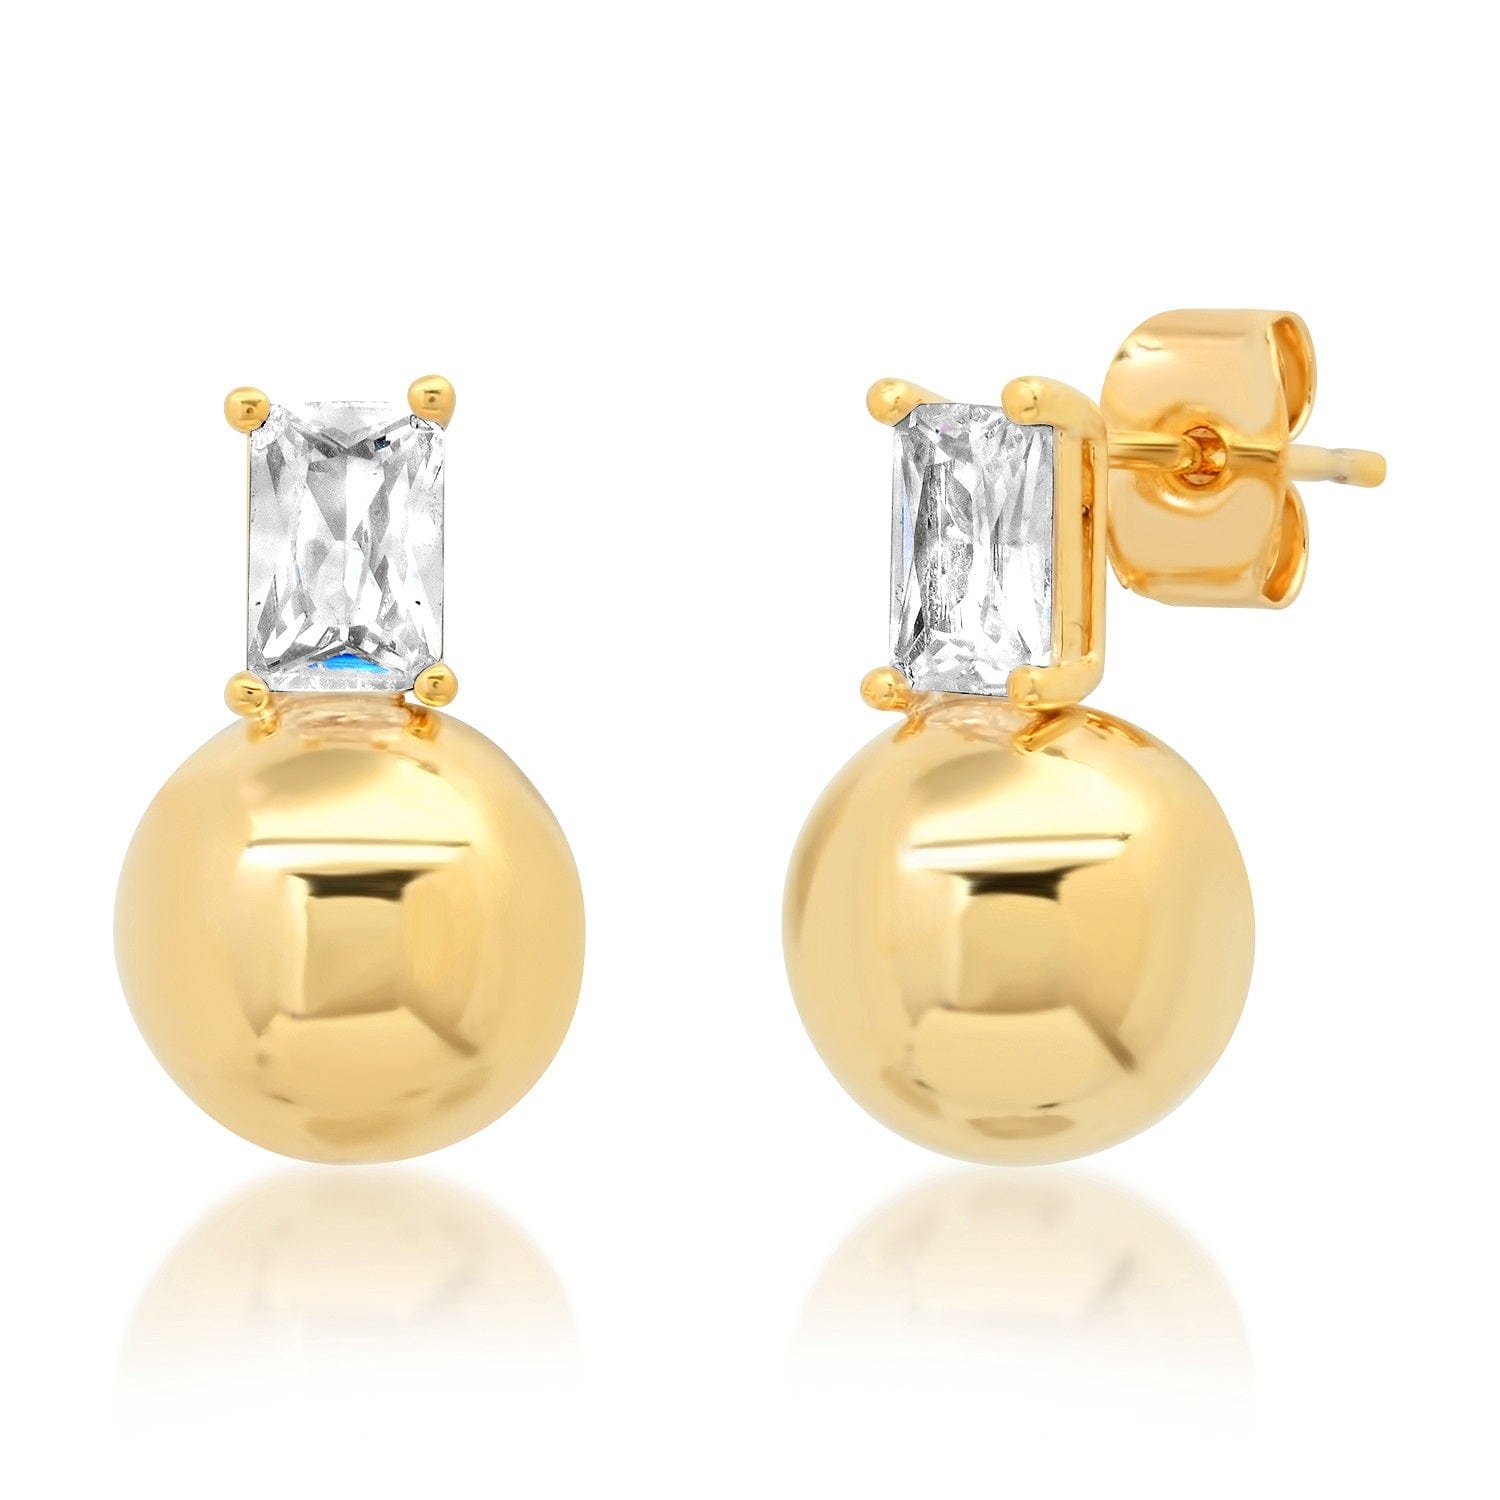 TAI JEWELRY Earrings Emerald Cut Cz And Gold Ball Stud